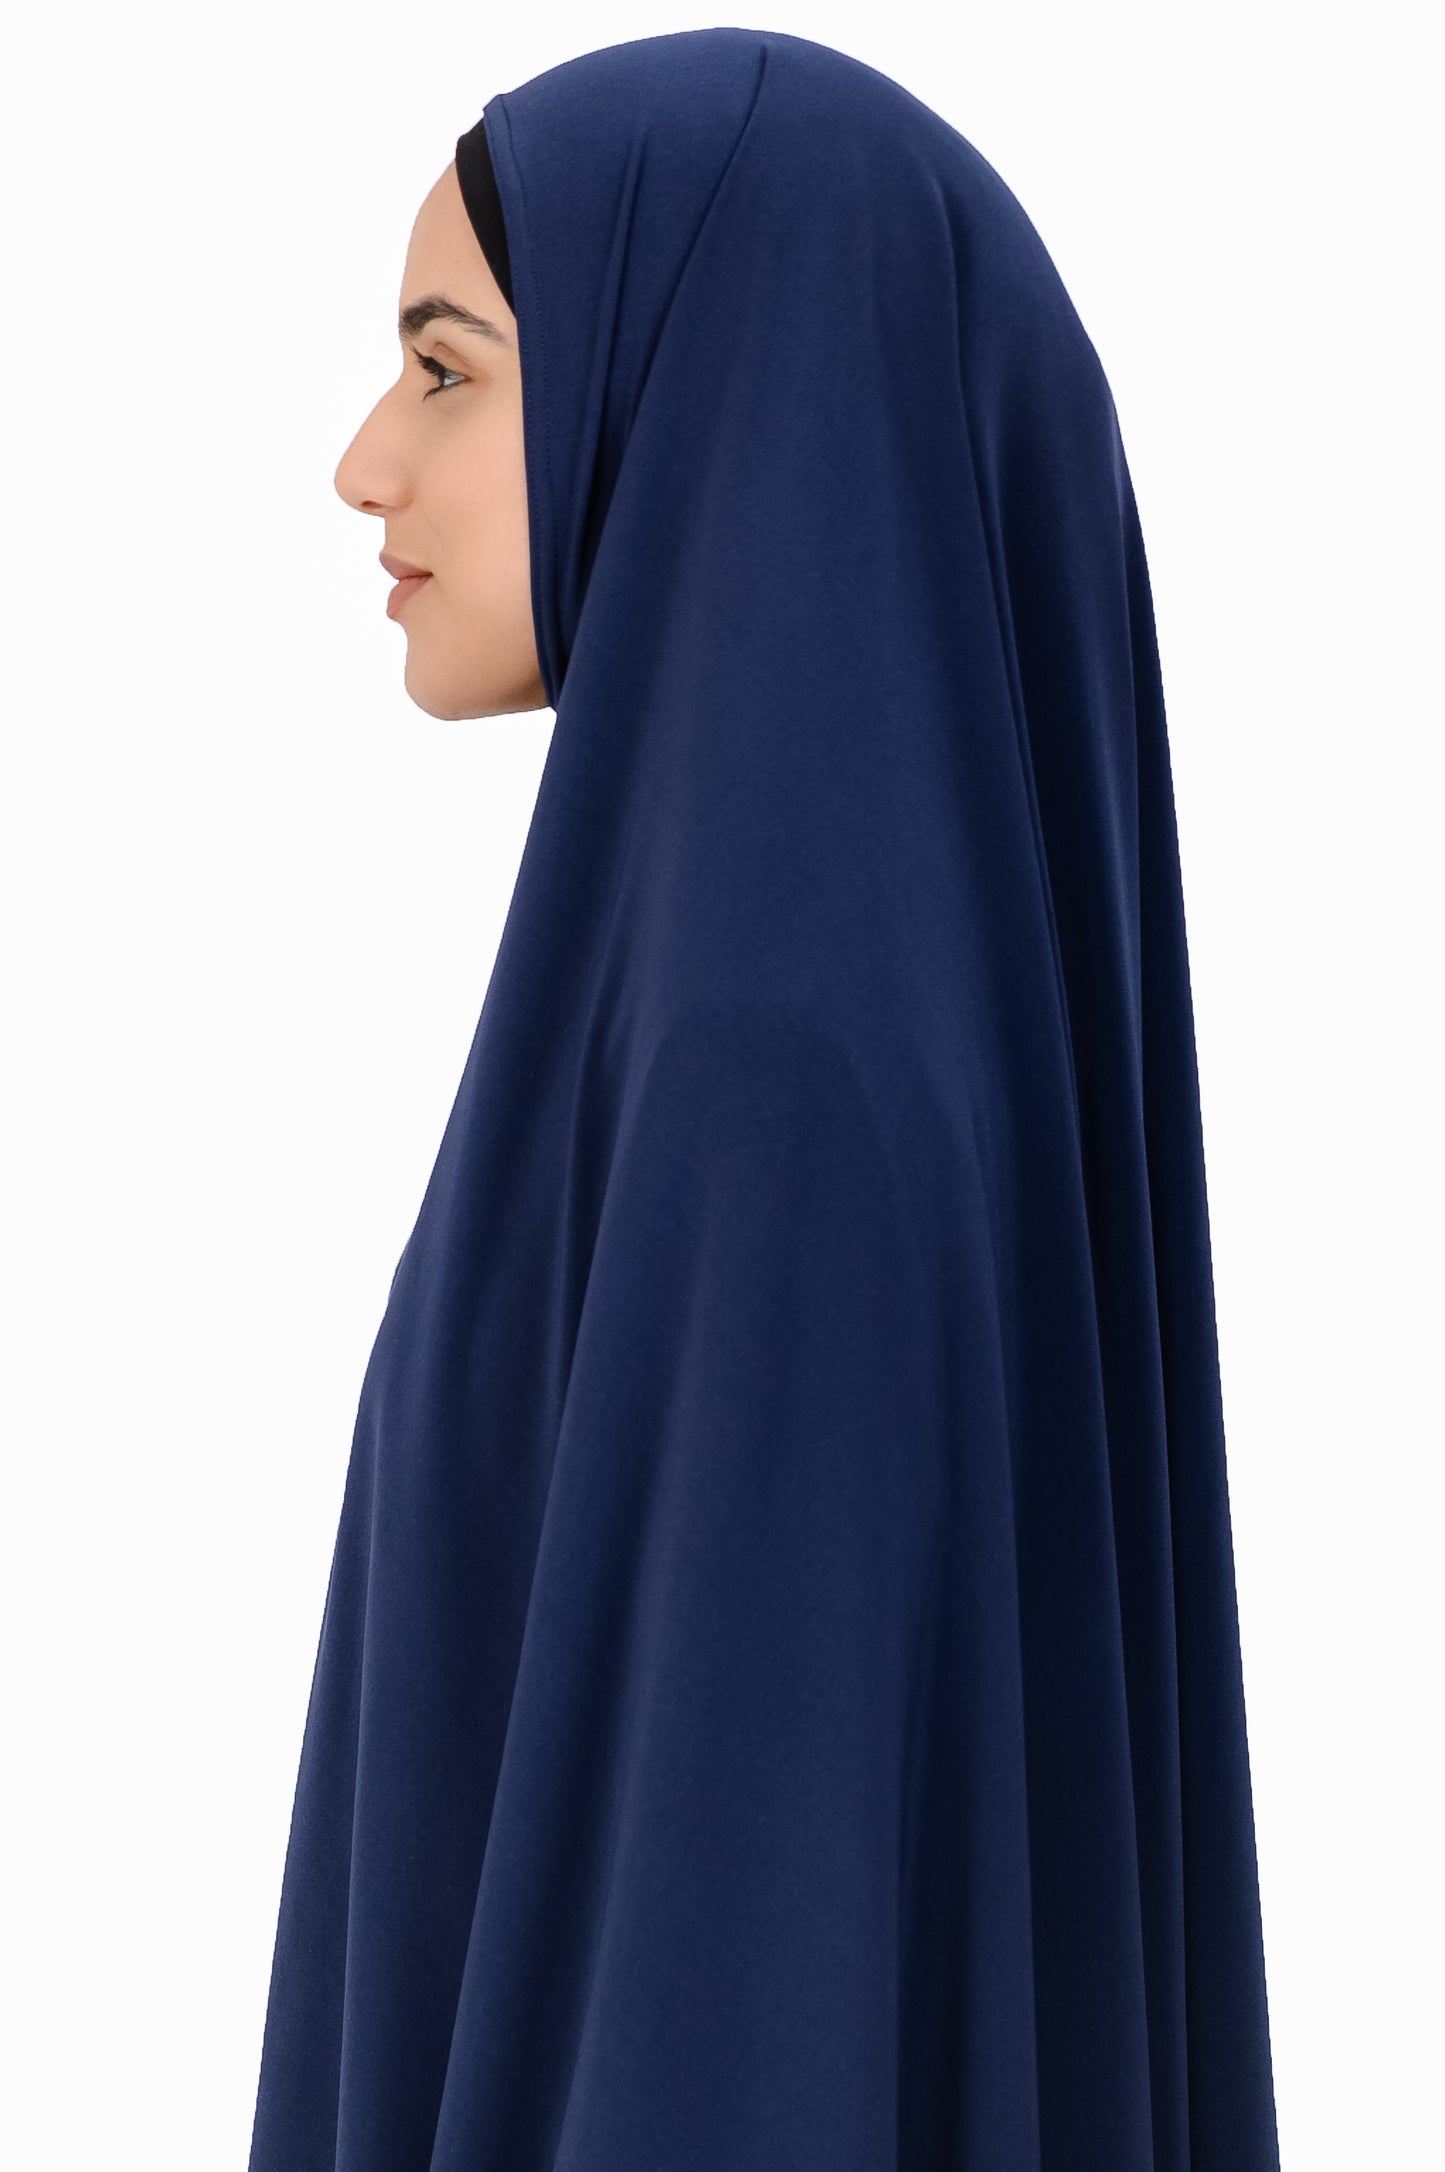 Long Sleeved Jelbab in Navy